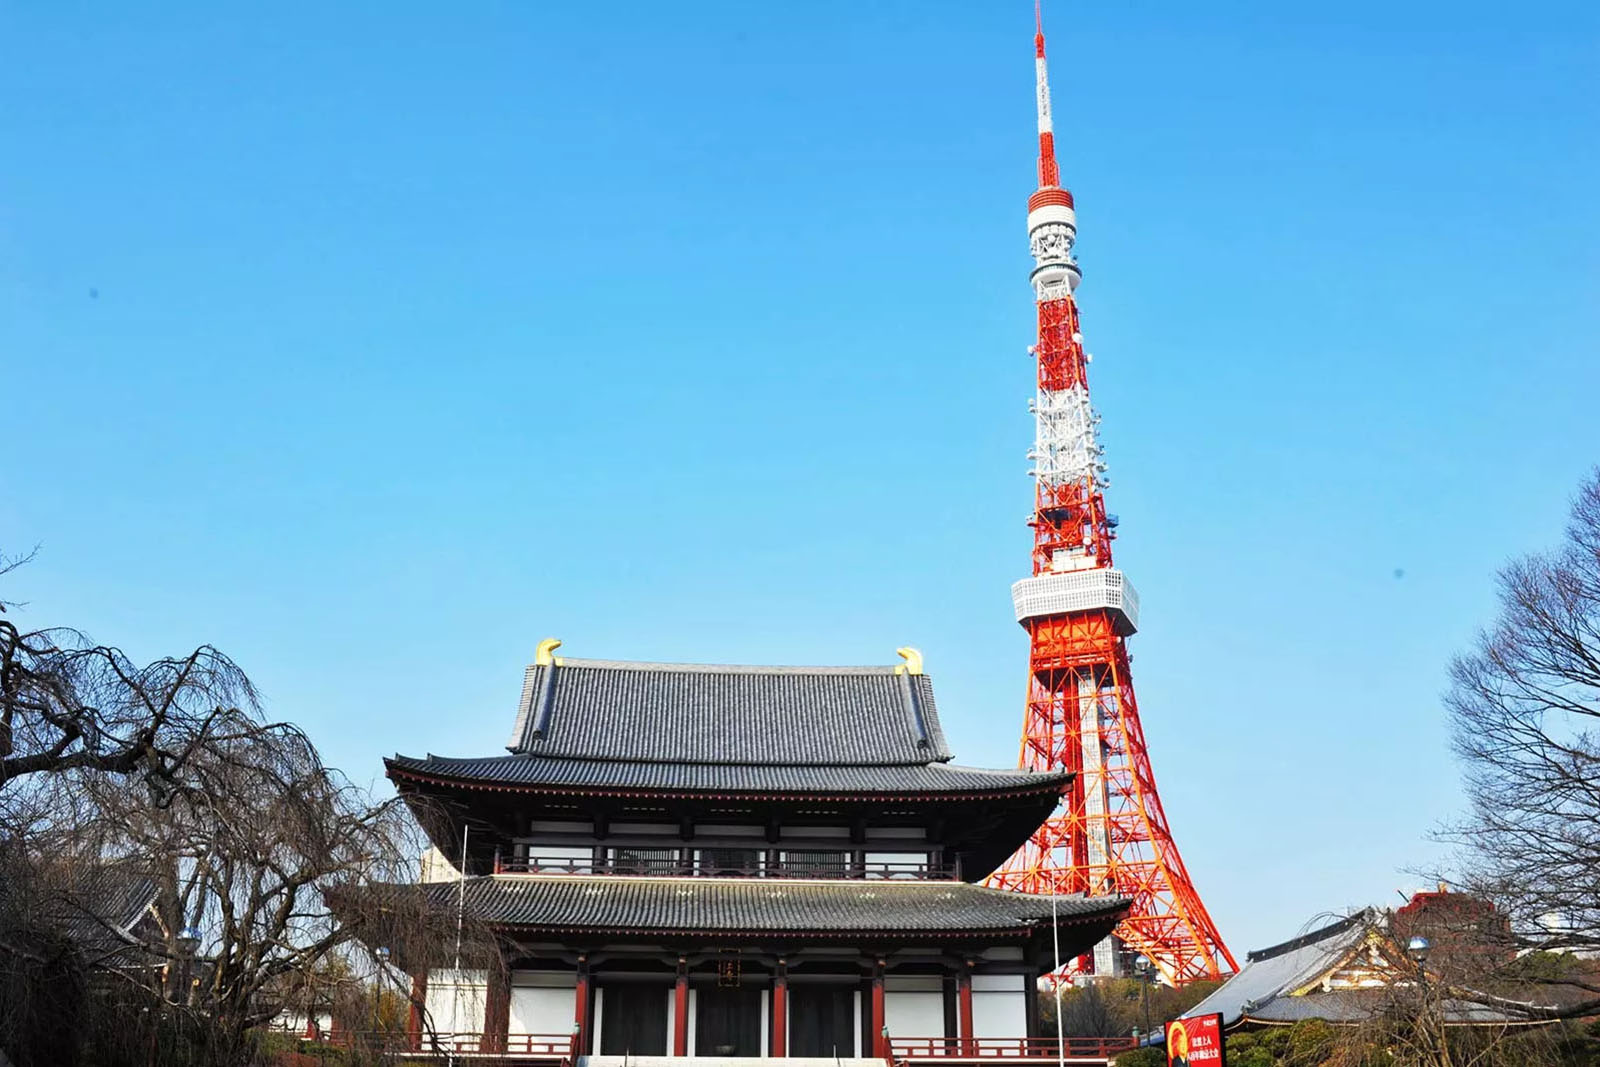 Tokyo Tower/Zojoji Temple